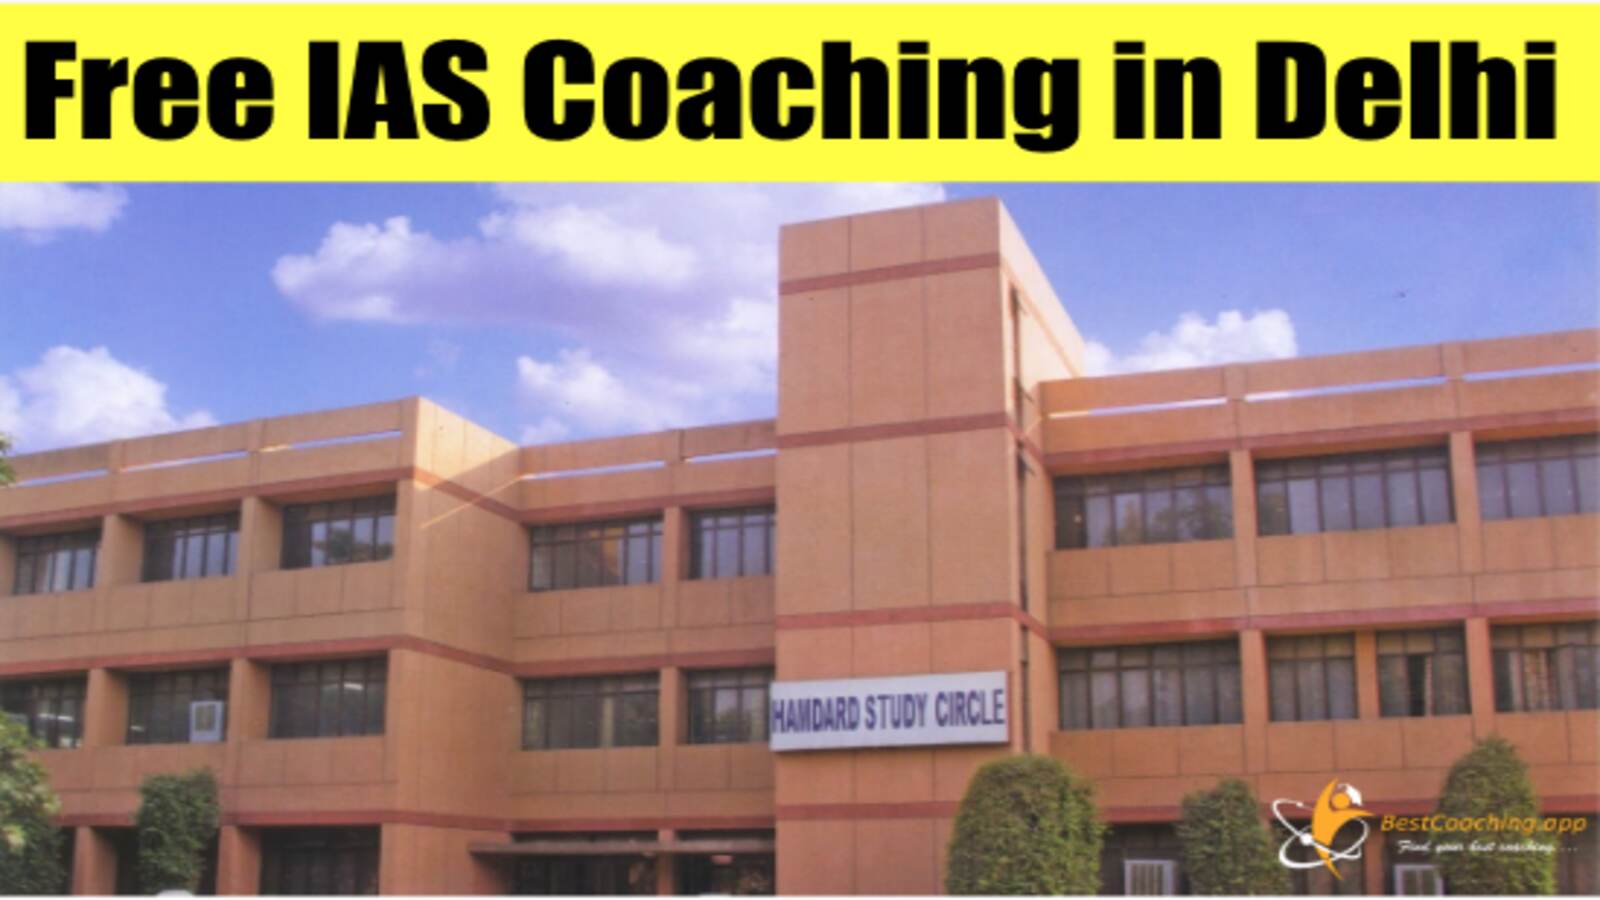 Hamdard Study Circle Free IAS Coaching in Delhi